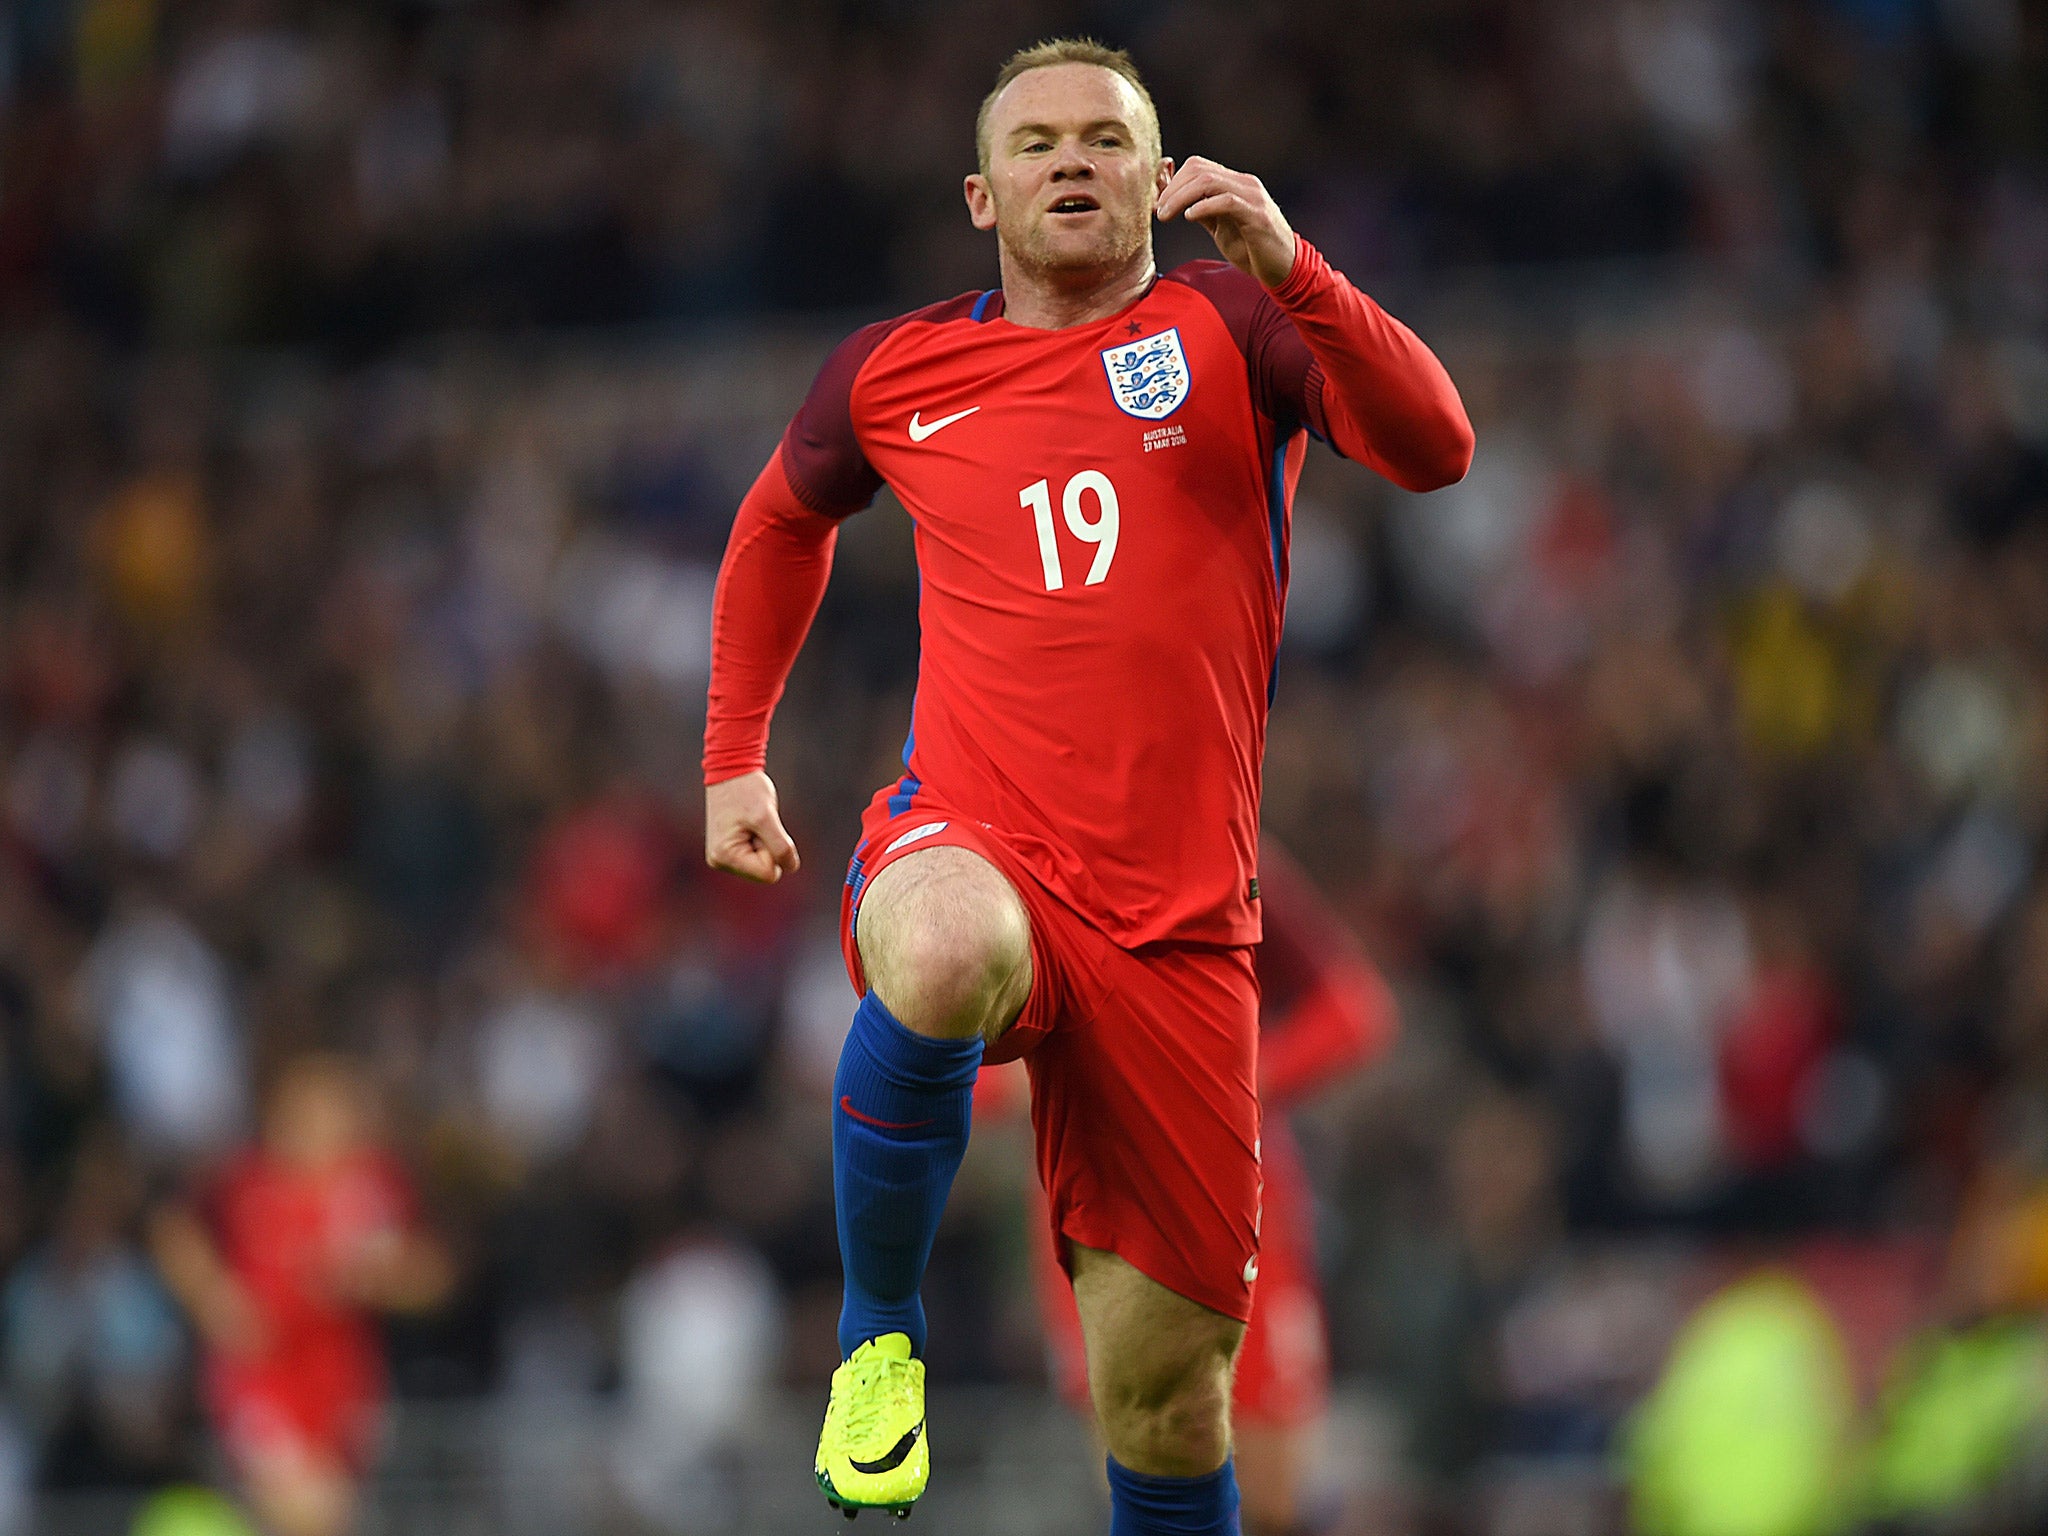 Wayne Rooney leaps in celebration after scoring for England against Australia